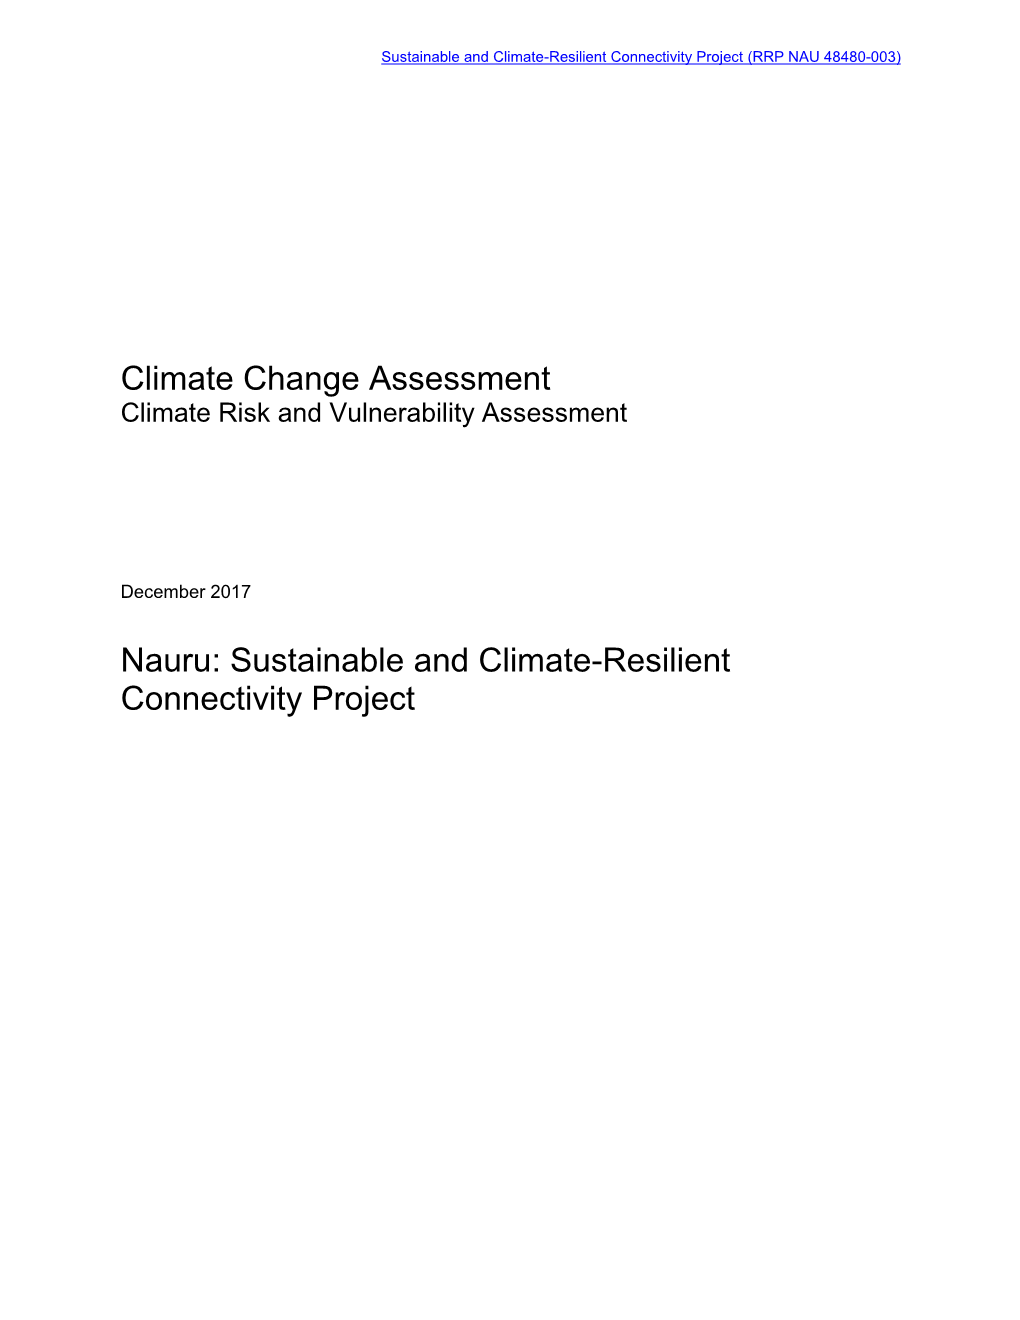 Climate Risk & Vulnerability Assessment